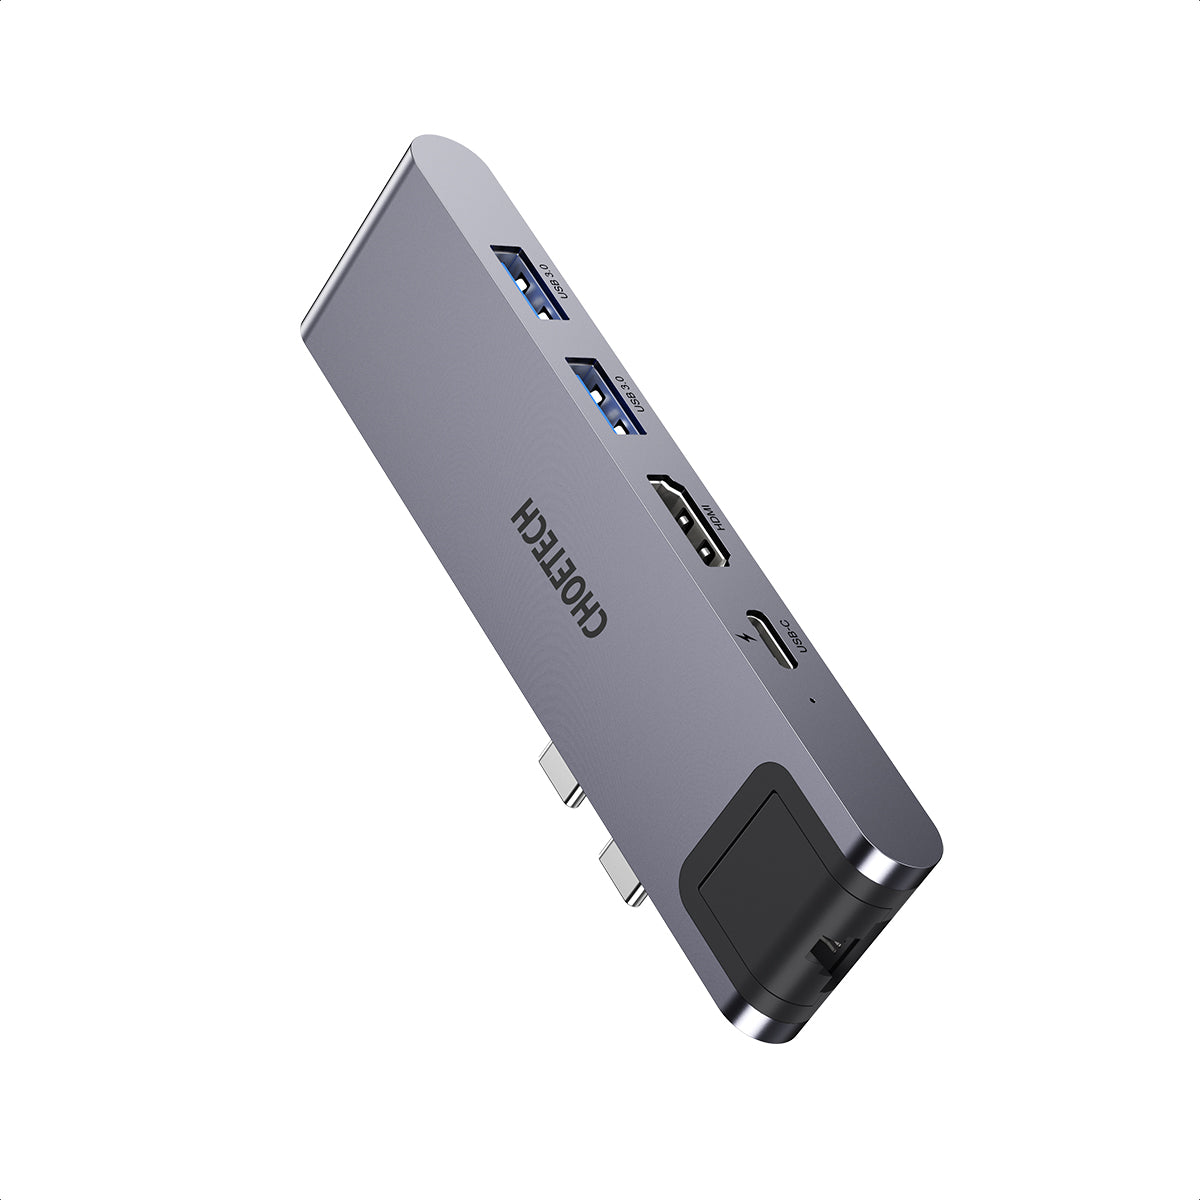 HUB-M24 Choetech 7-in-2 MacBook Pro/Air USB-Adapter USB-C-Hub